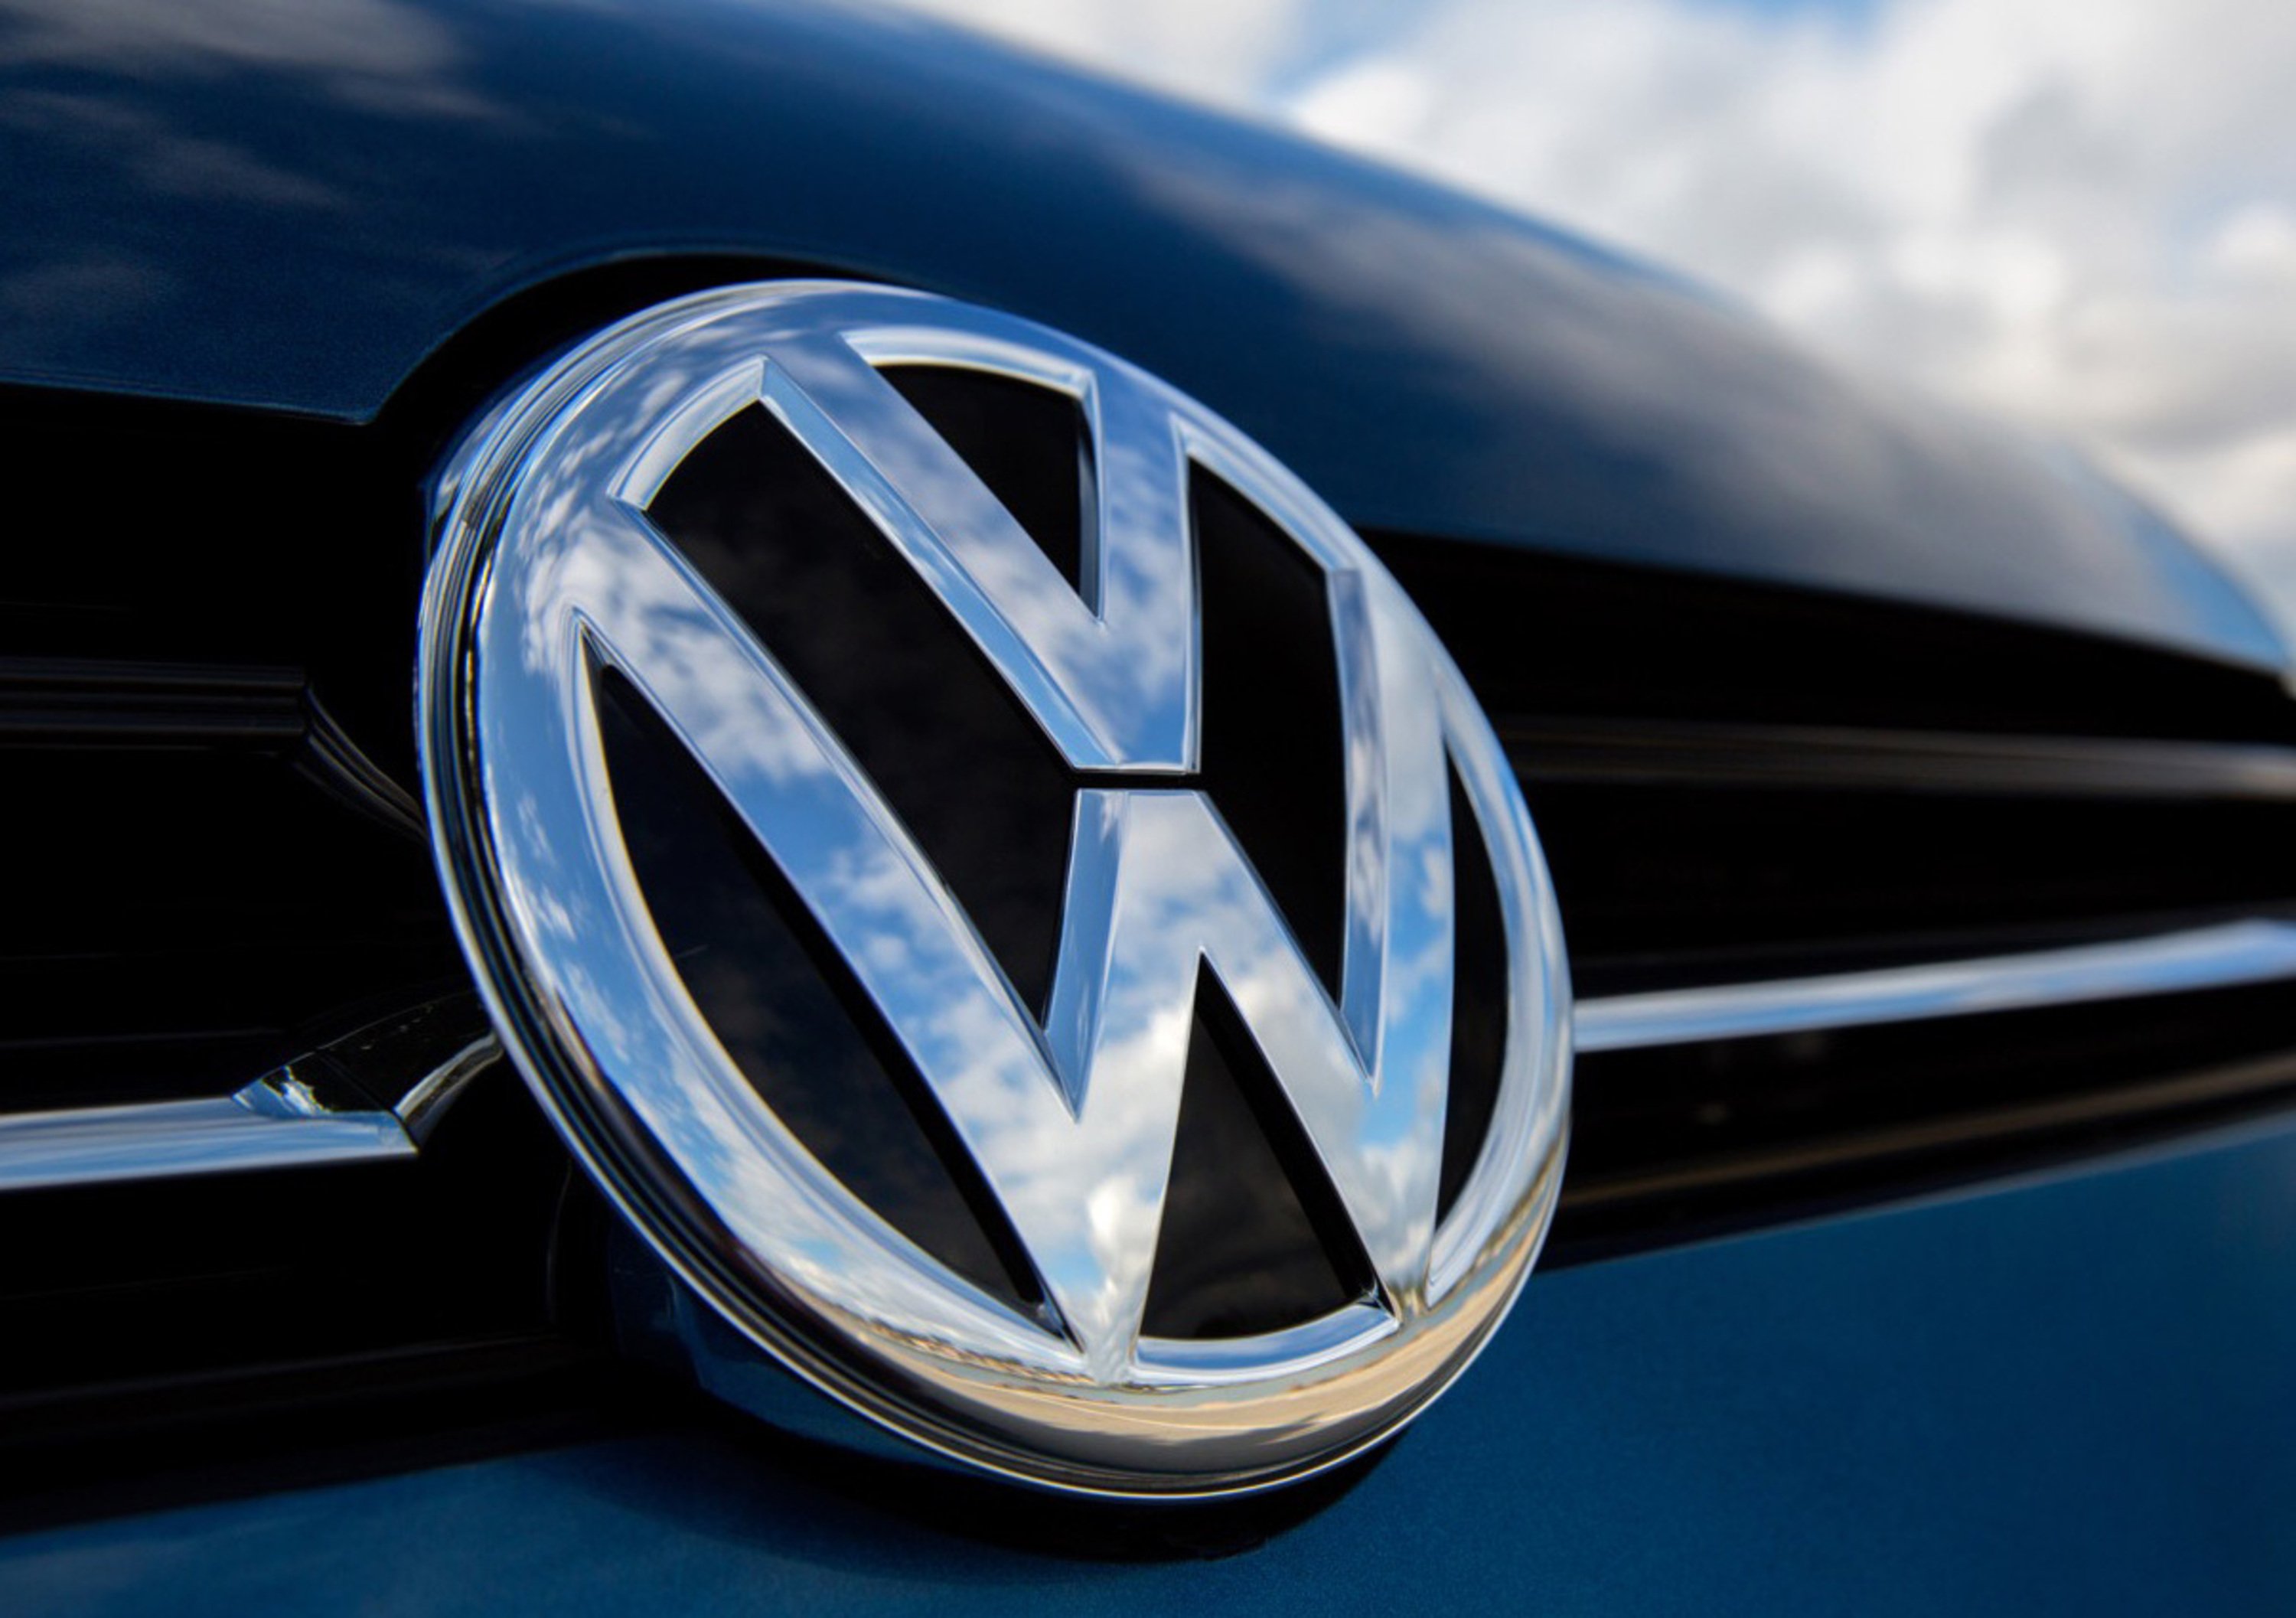 VW: semestrale 2016 oltre le attese nonostante il Dieselgate